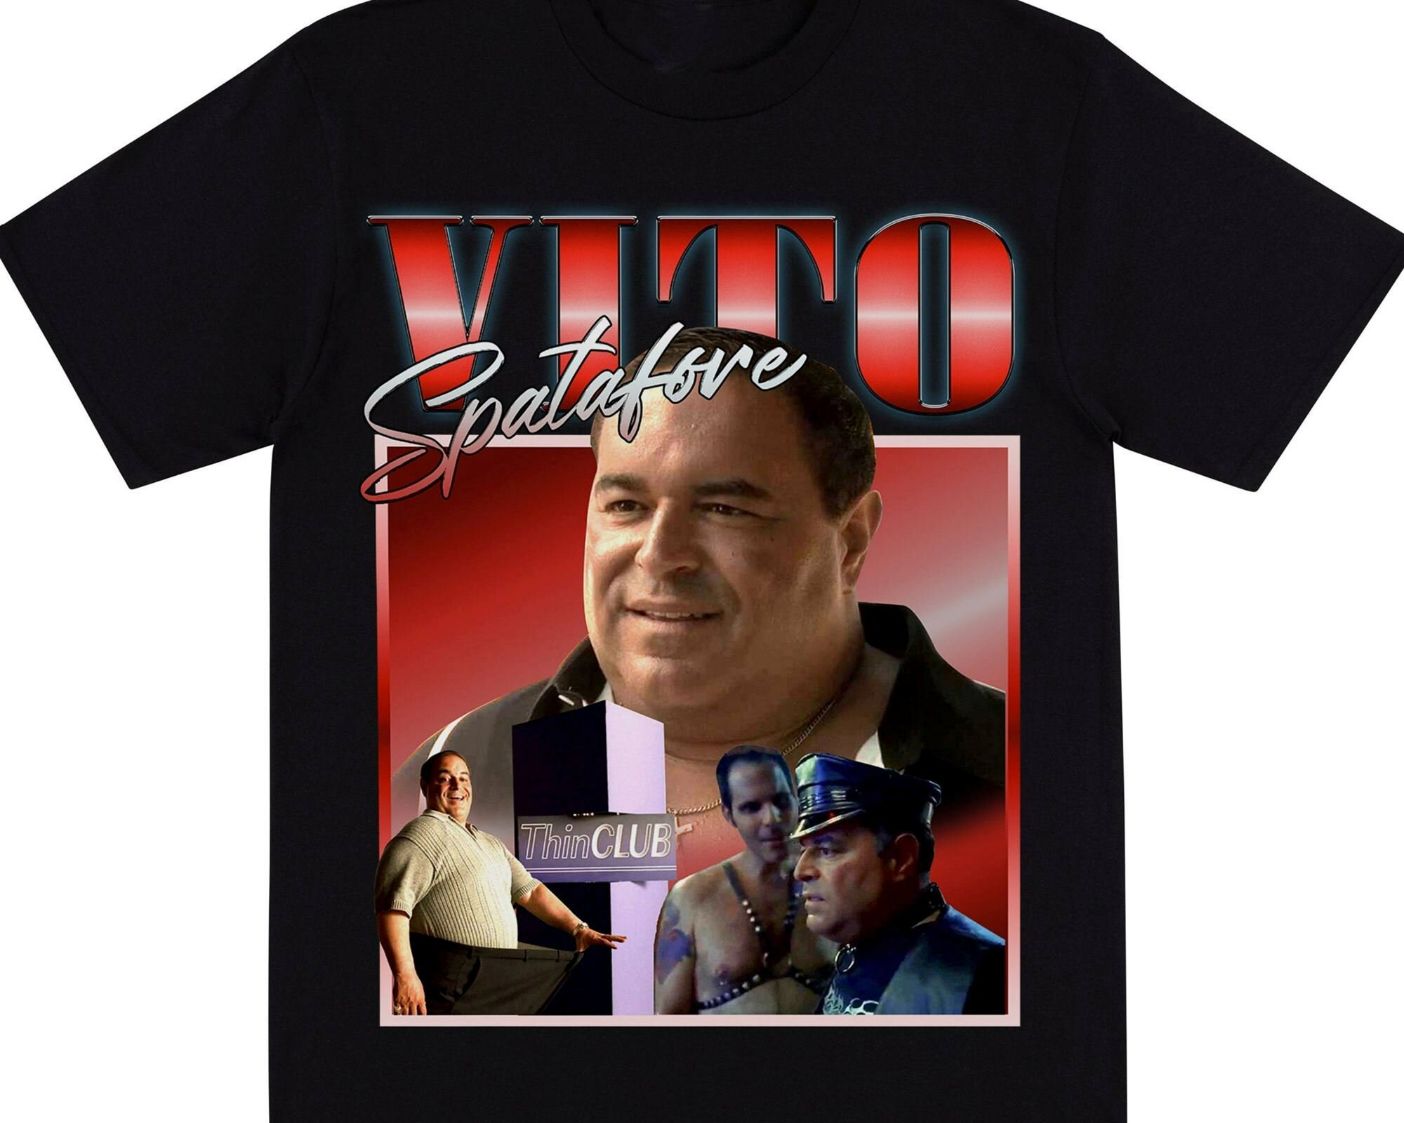 Vito Spatafore T-Shirt